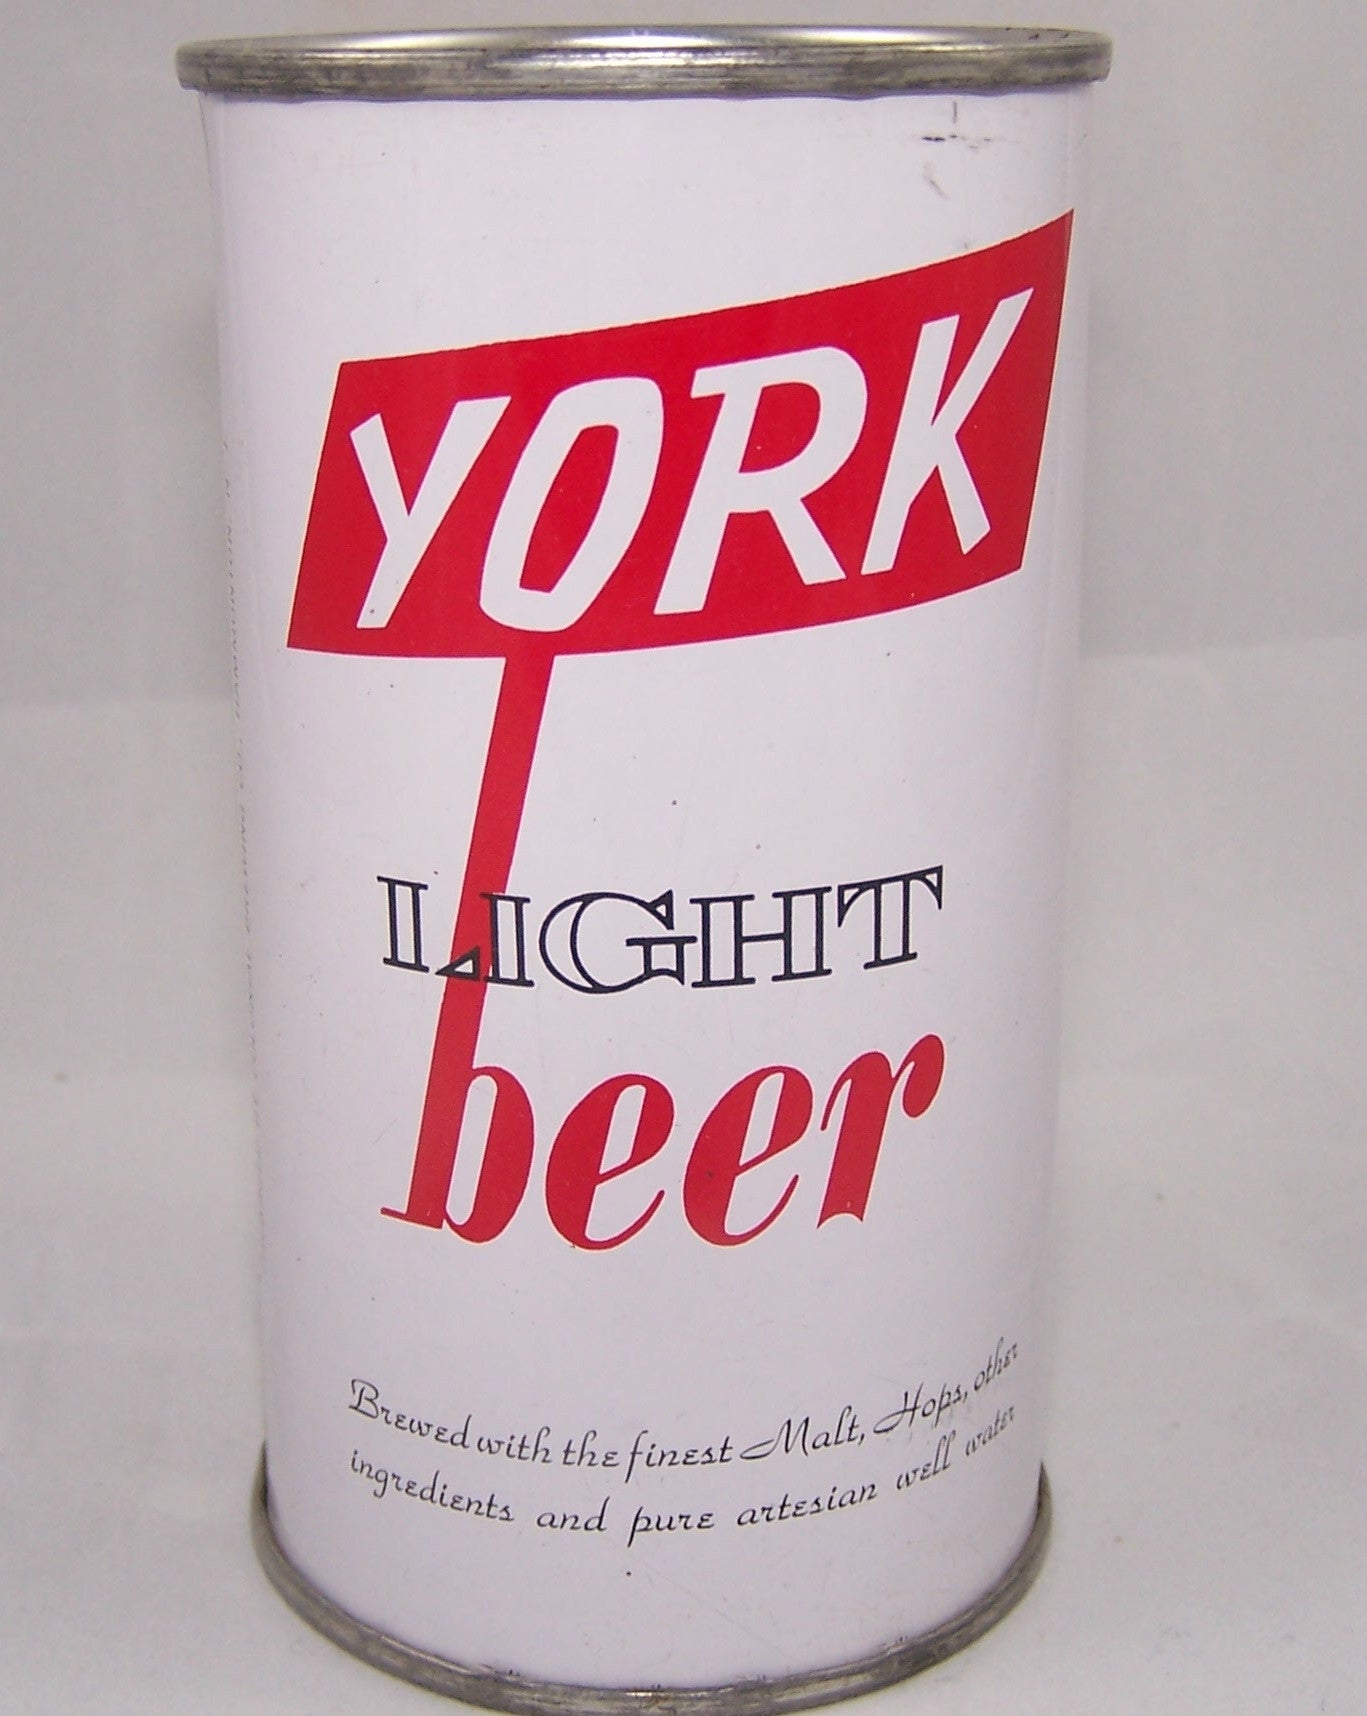 York Light Beer, USBC 147-2 Grade 1/1+ Rolled